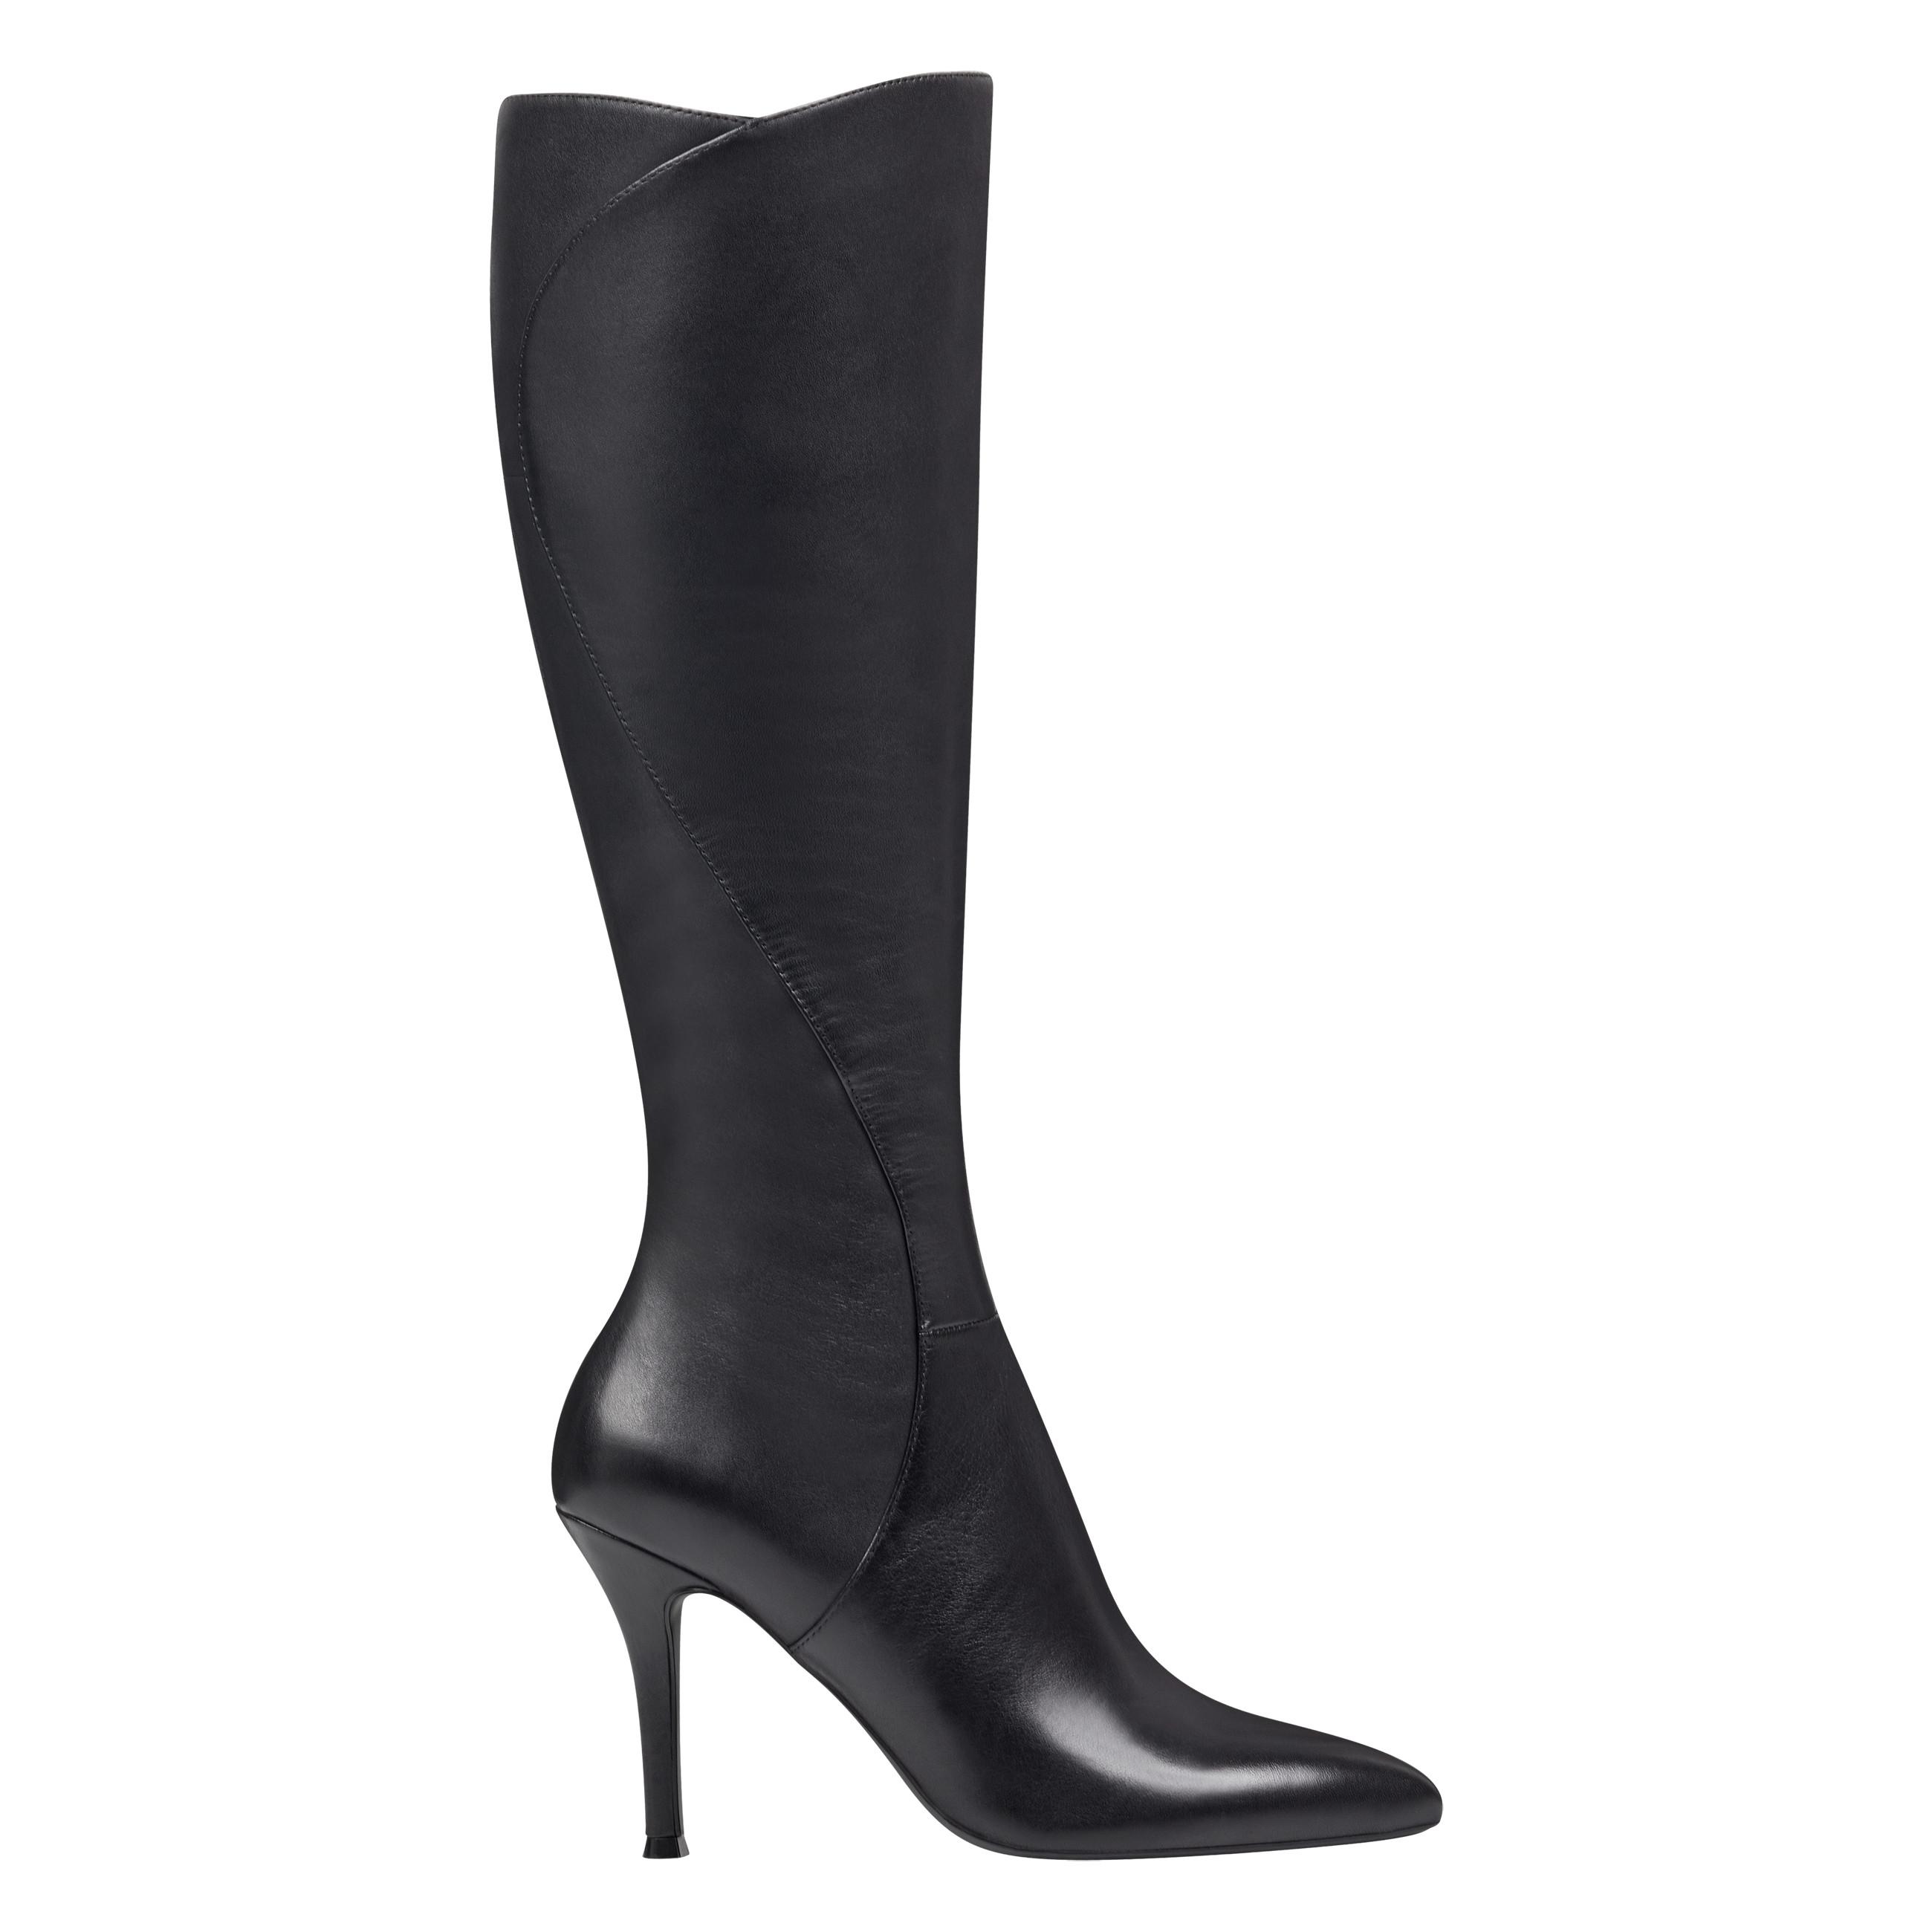 nine west black leather knee high boots